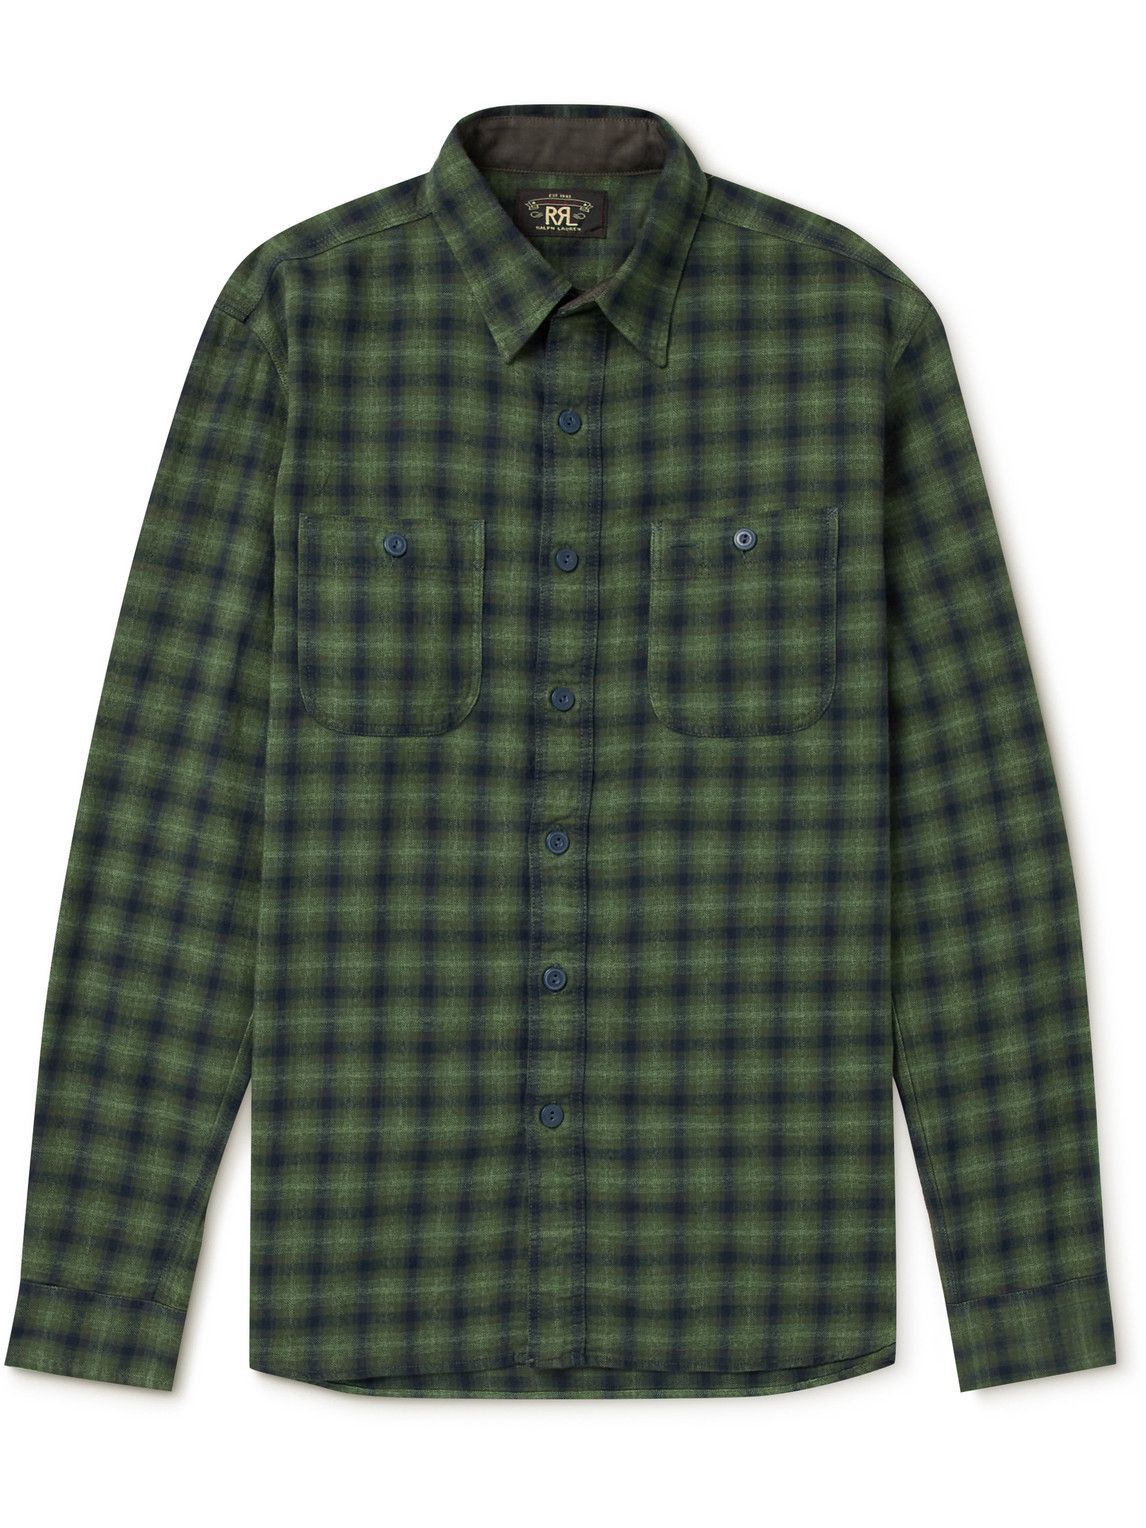 RRL - Farrell Checked Cotton Shirt - Green RRL